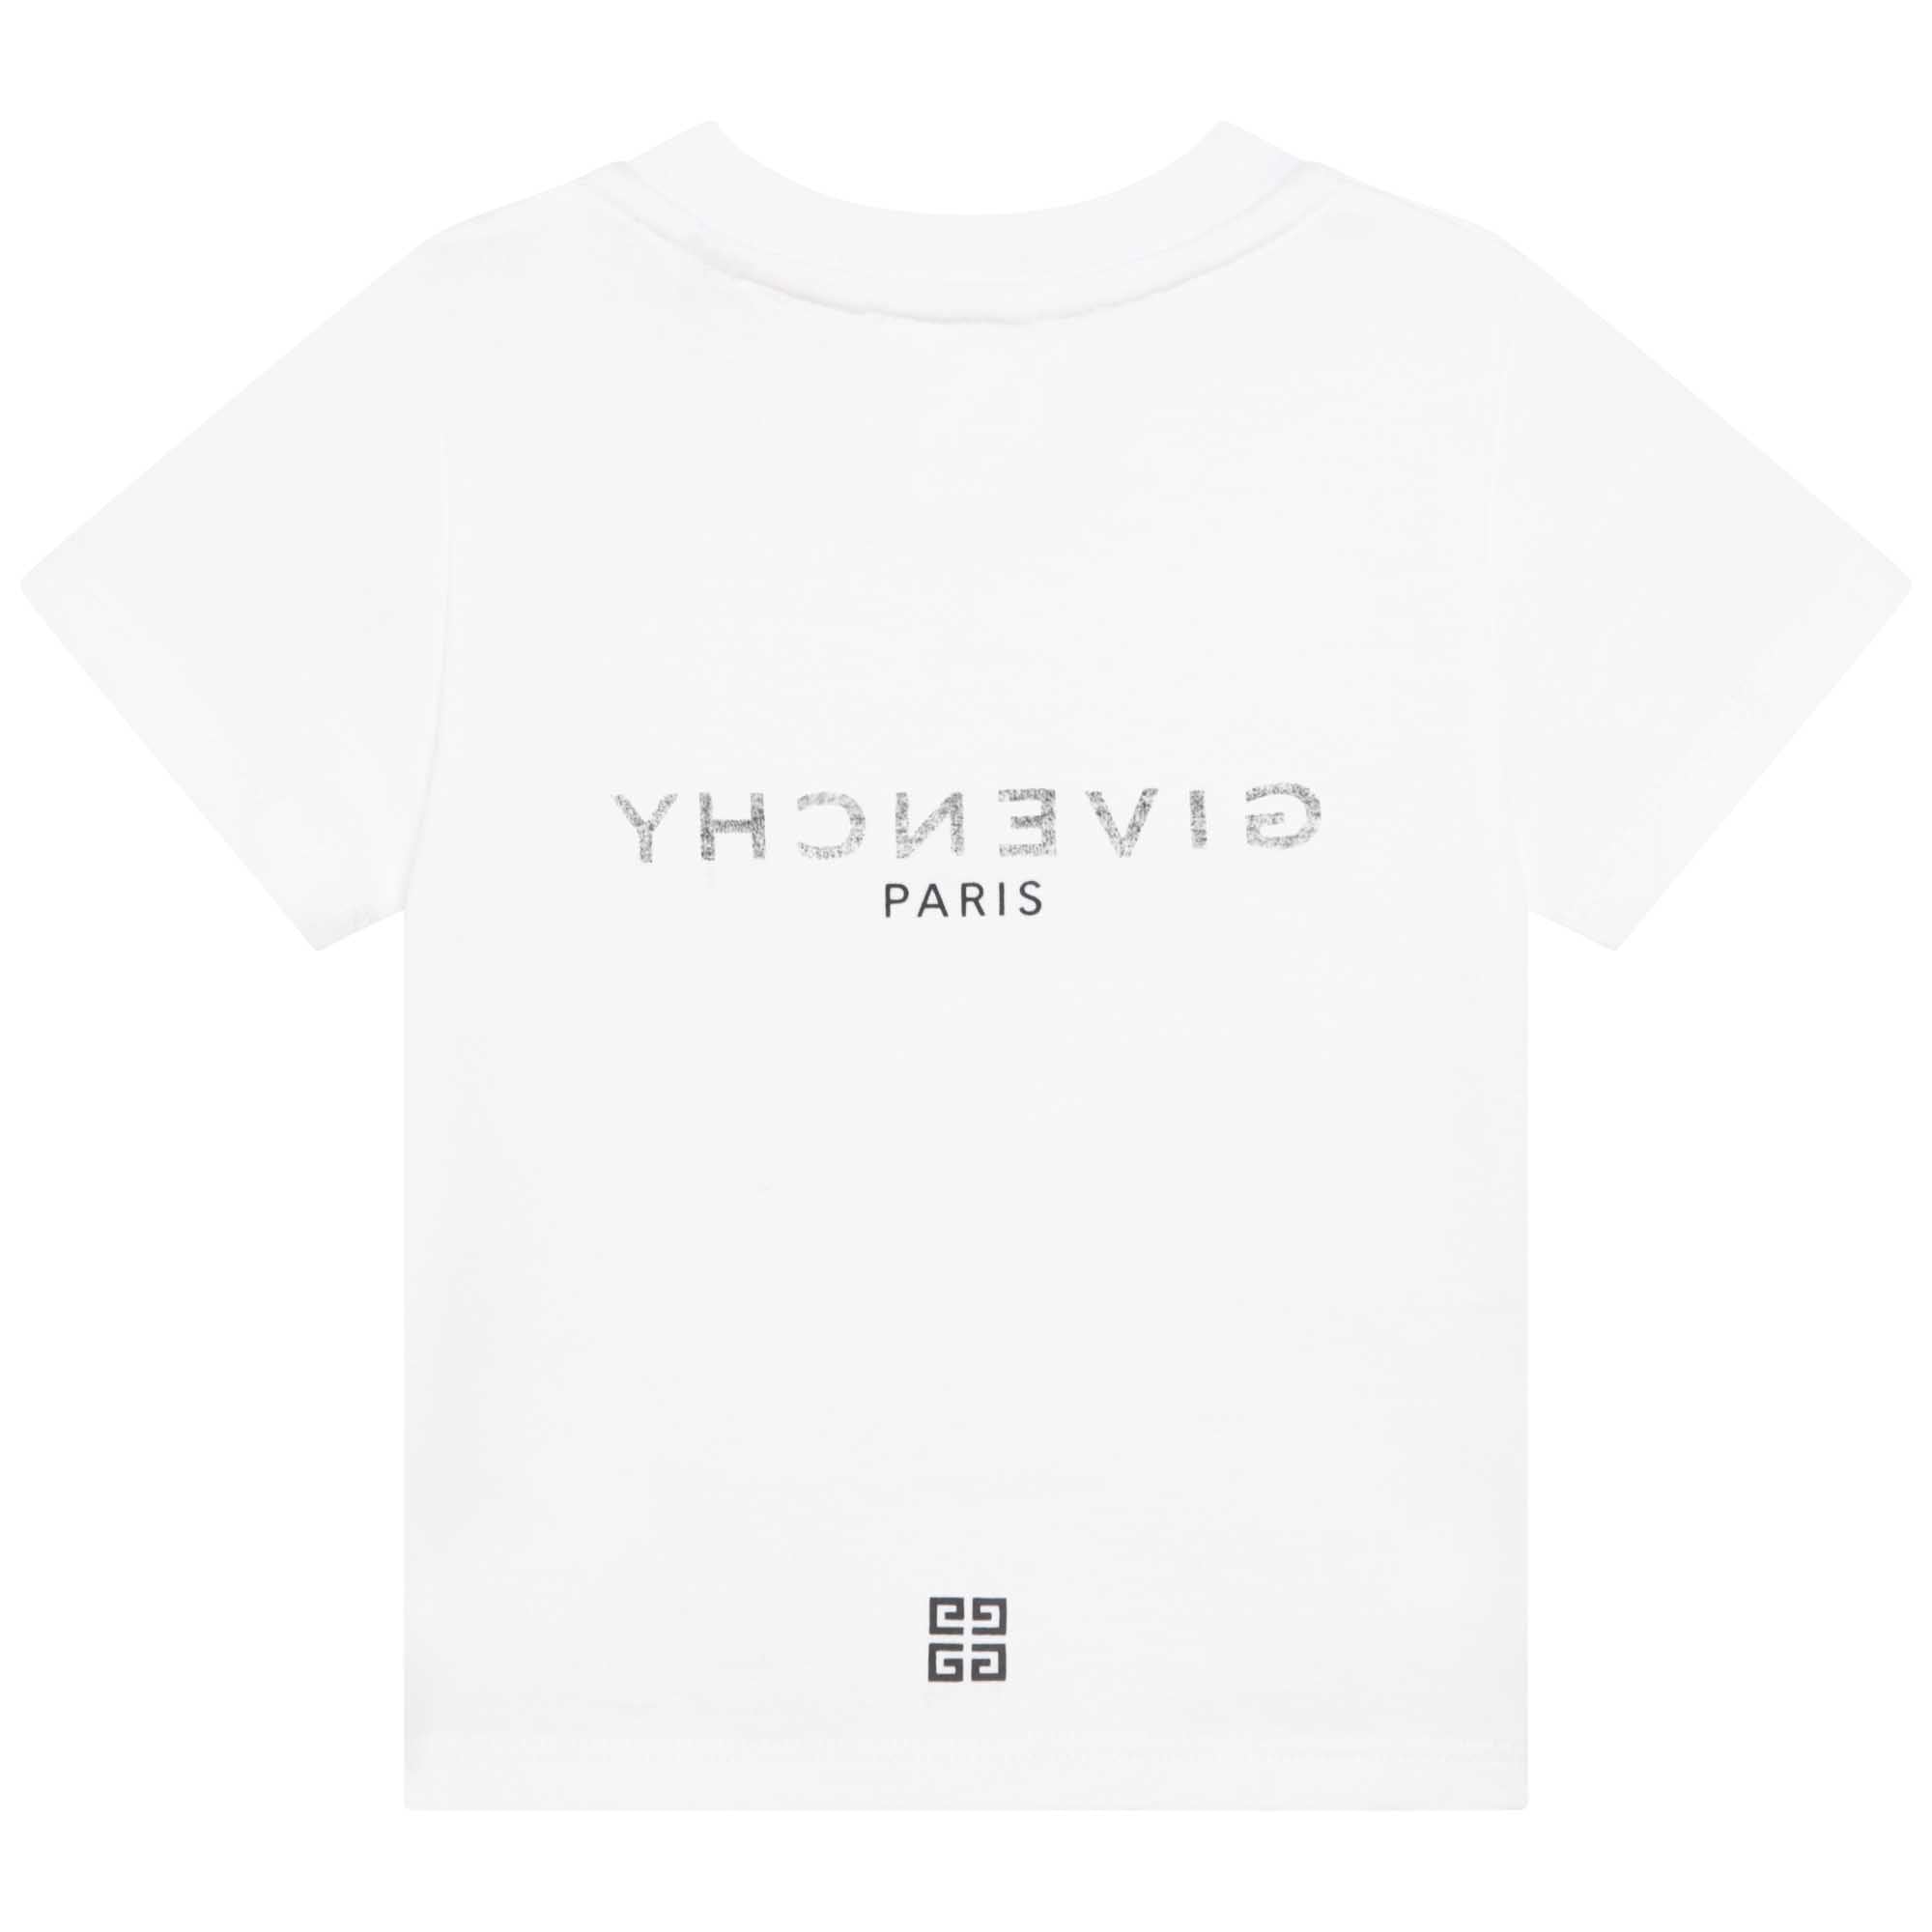 Givenchy Short Sleeves Tee-Shirt Style: H05246